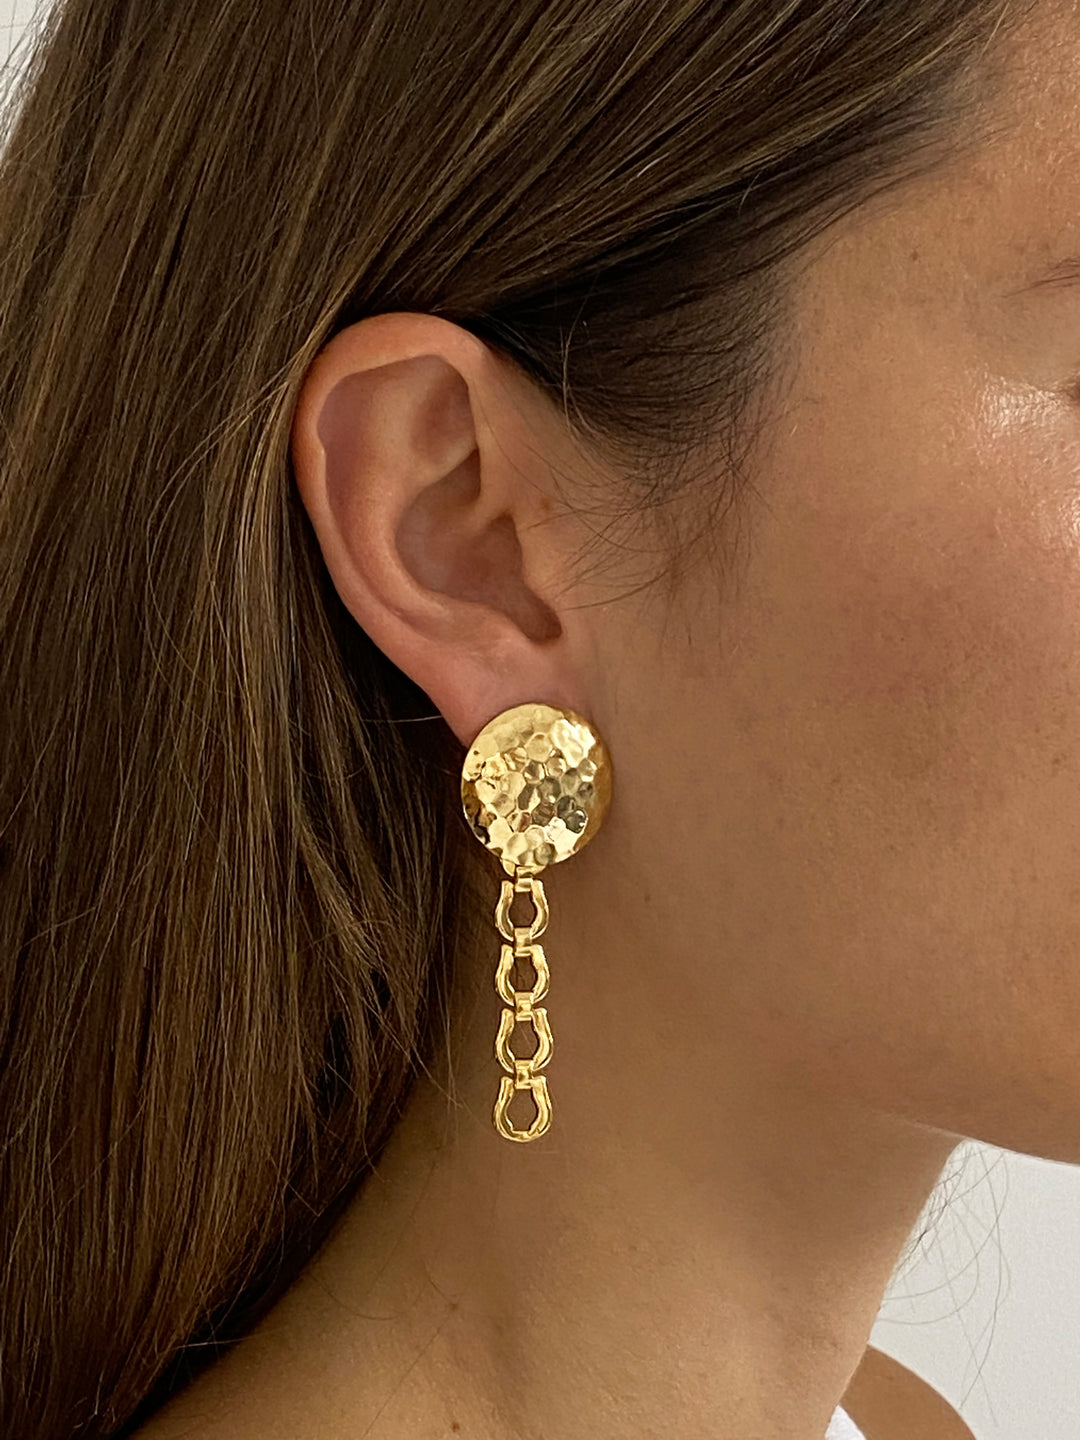 llayers-jewelry-upcycling-gold-long-chain-earrings-011-brooklyn-newyork-1